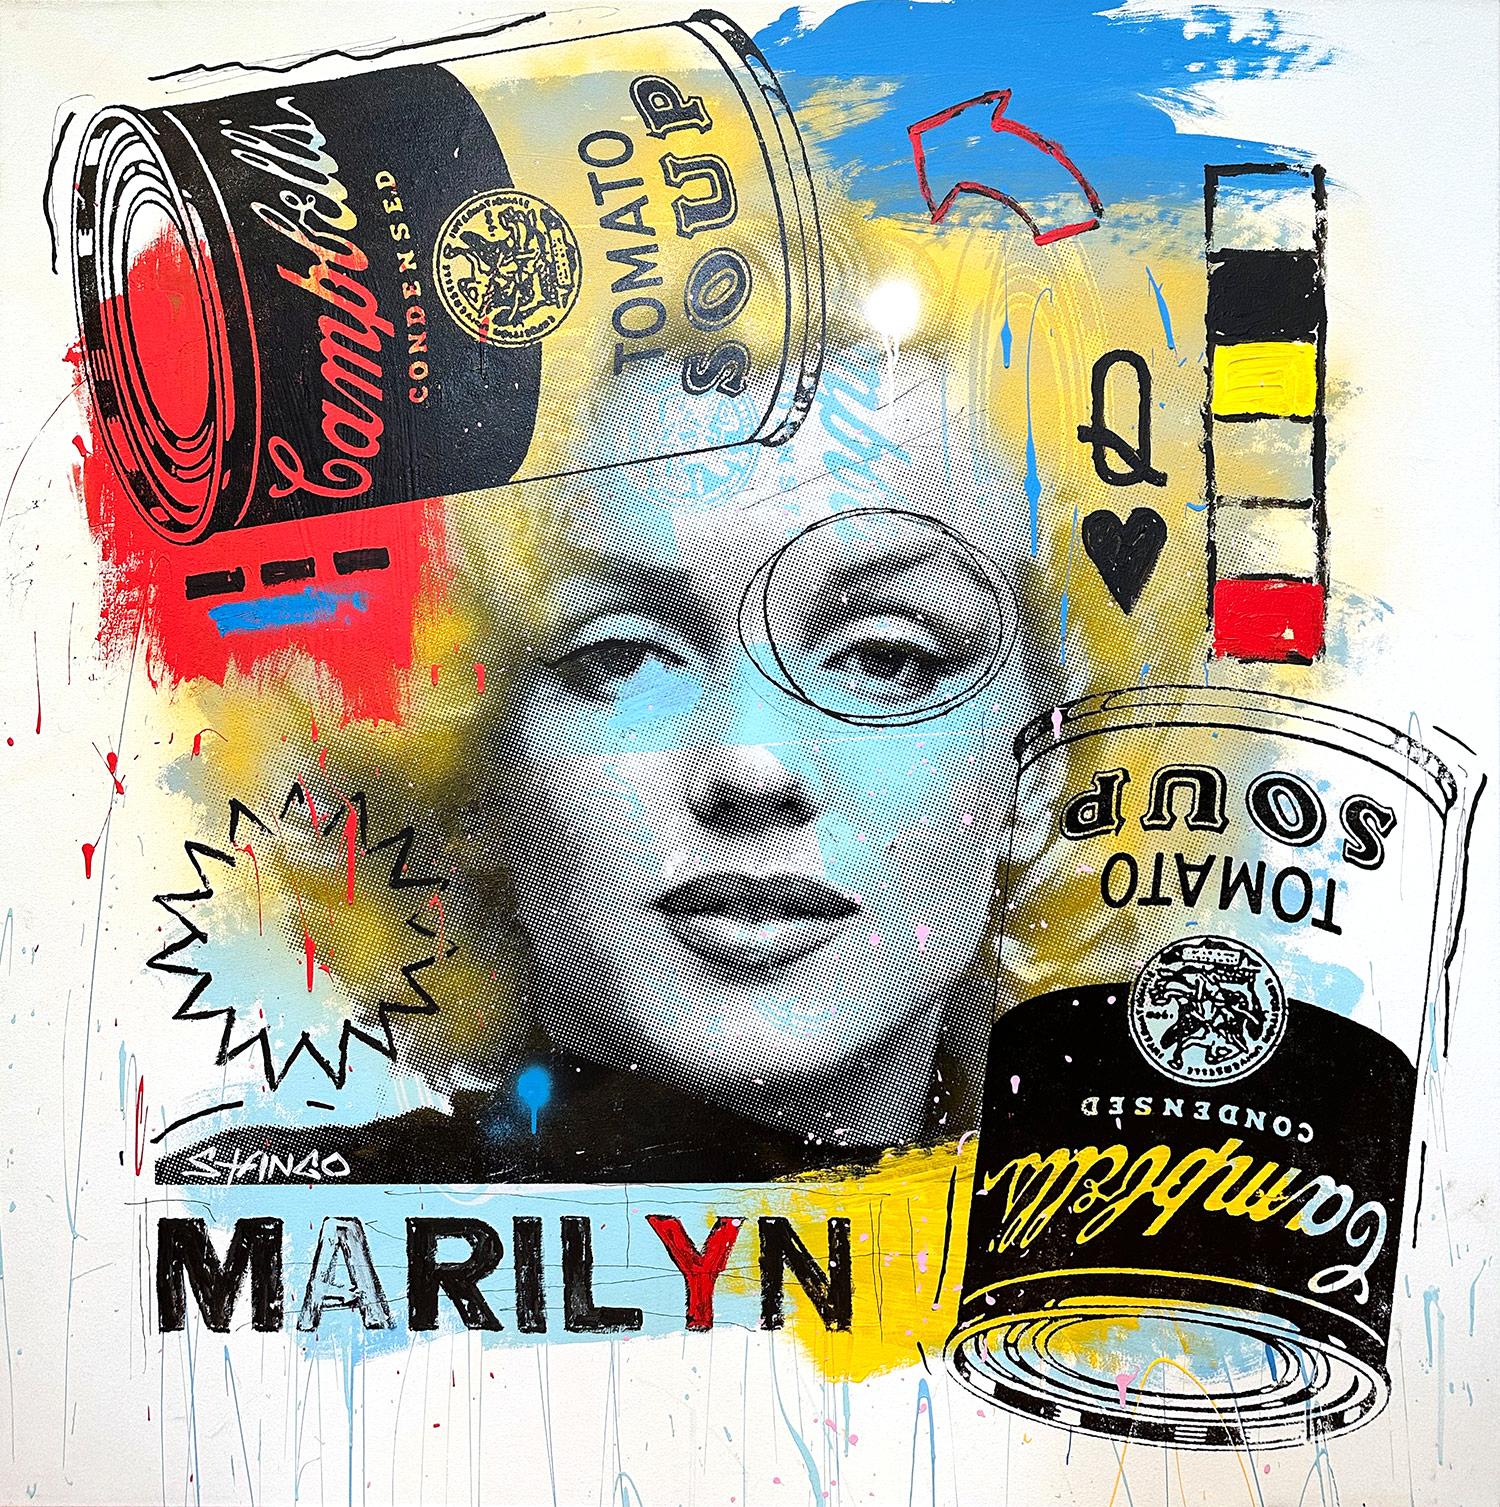 "Factory Girl" Marilyn Monroe & Campbells Soup Pop Art Acrylic Painting Canvas